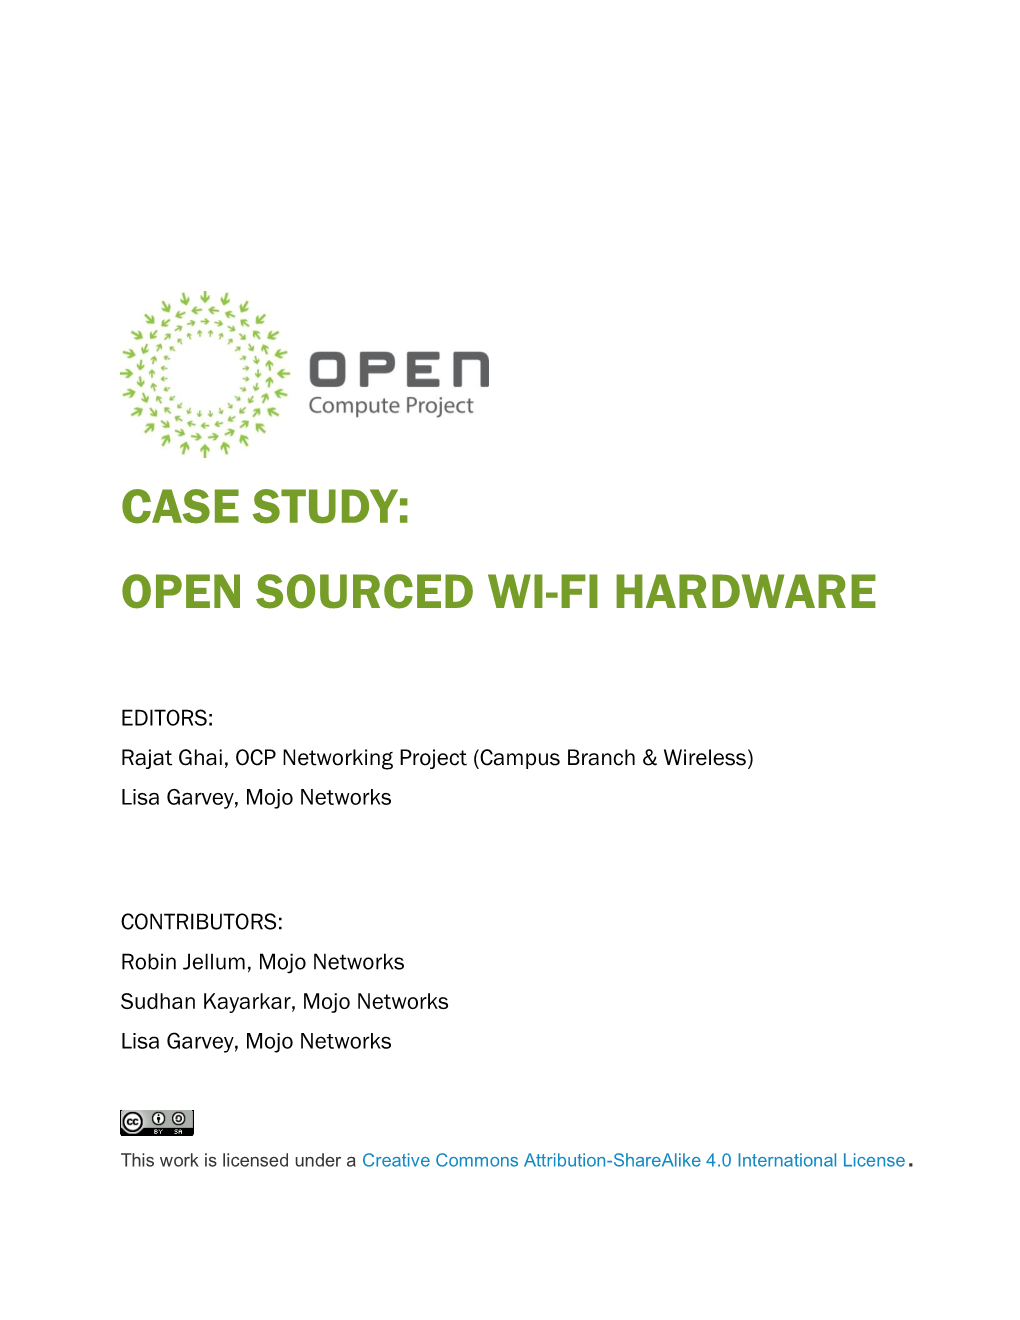 Case Study: Open Sourced Wi-Fi Hardware